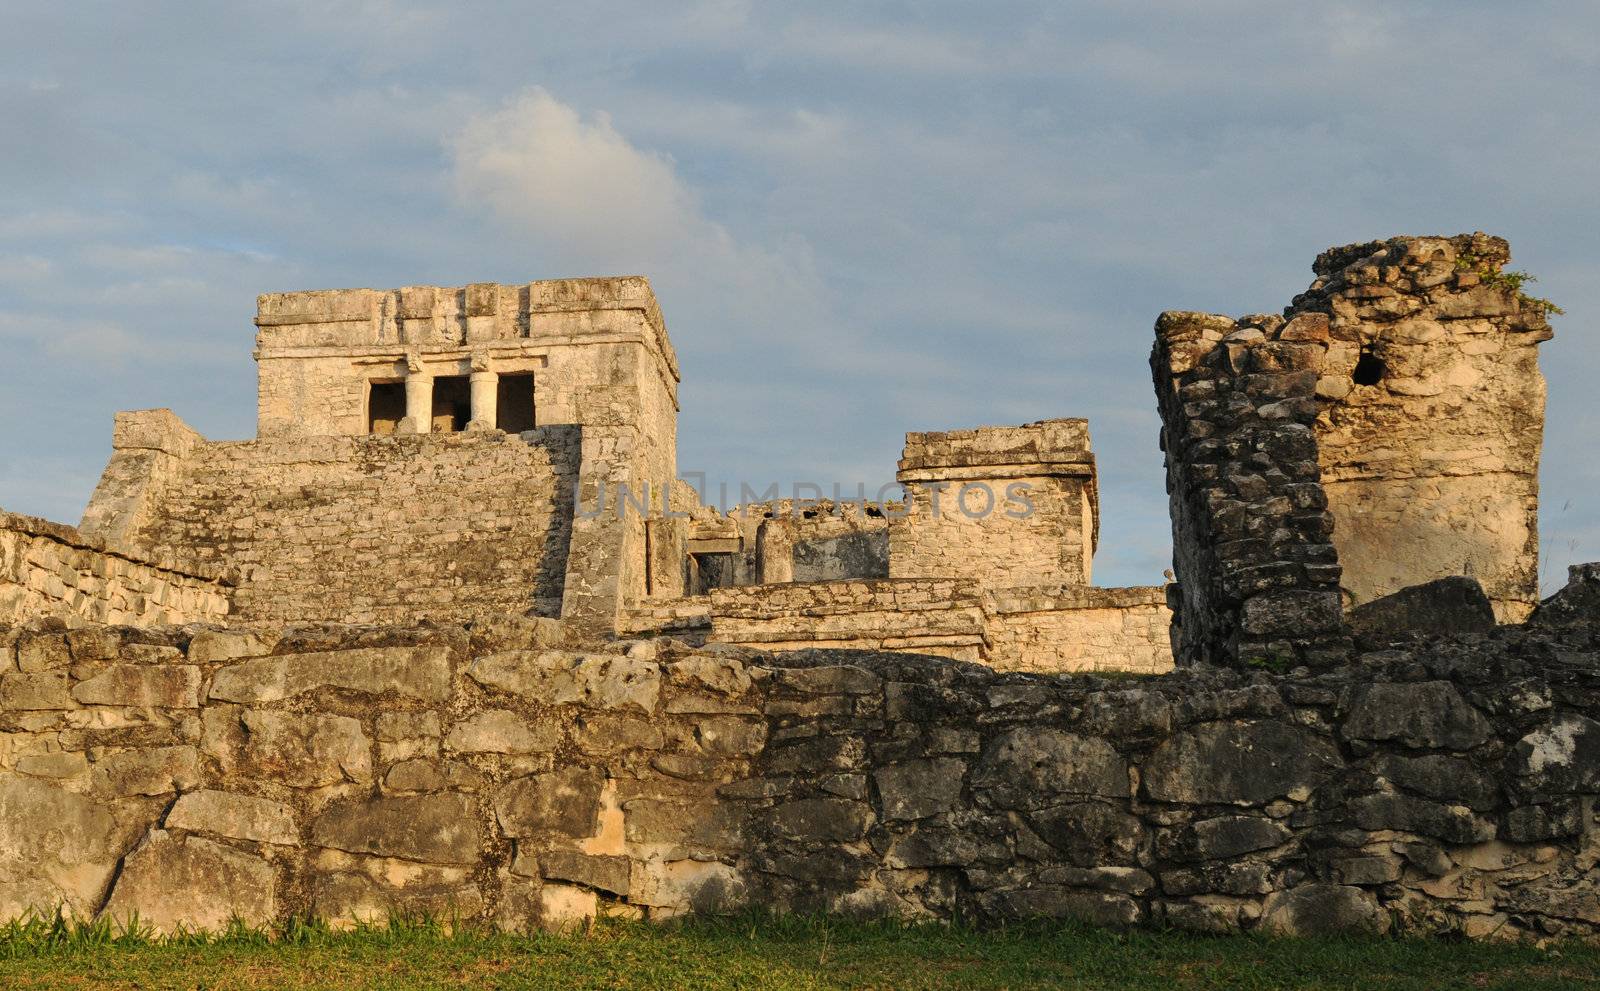 mayan or native american ruins